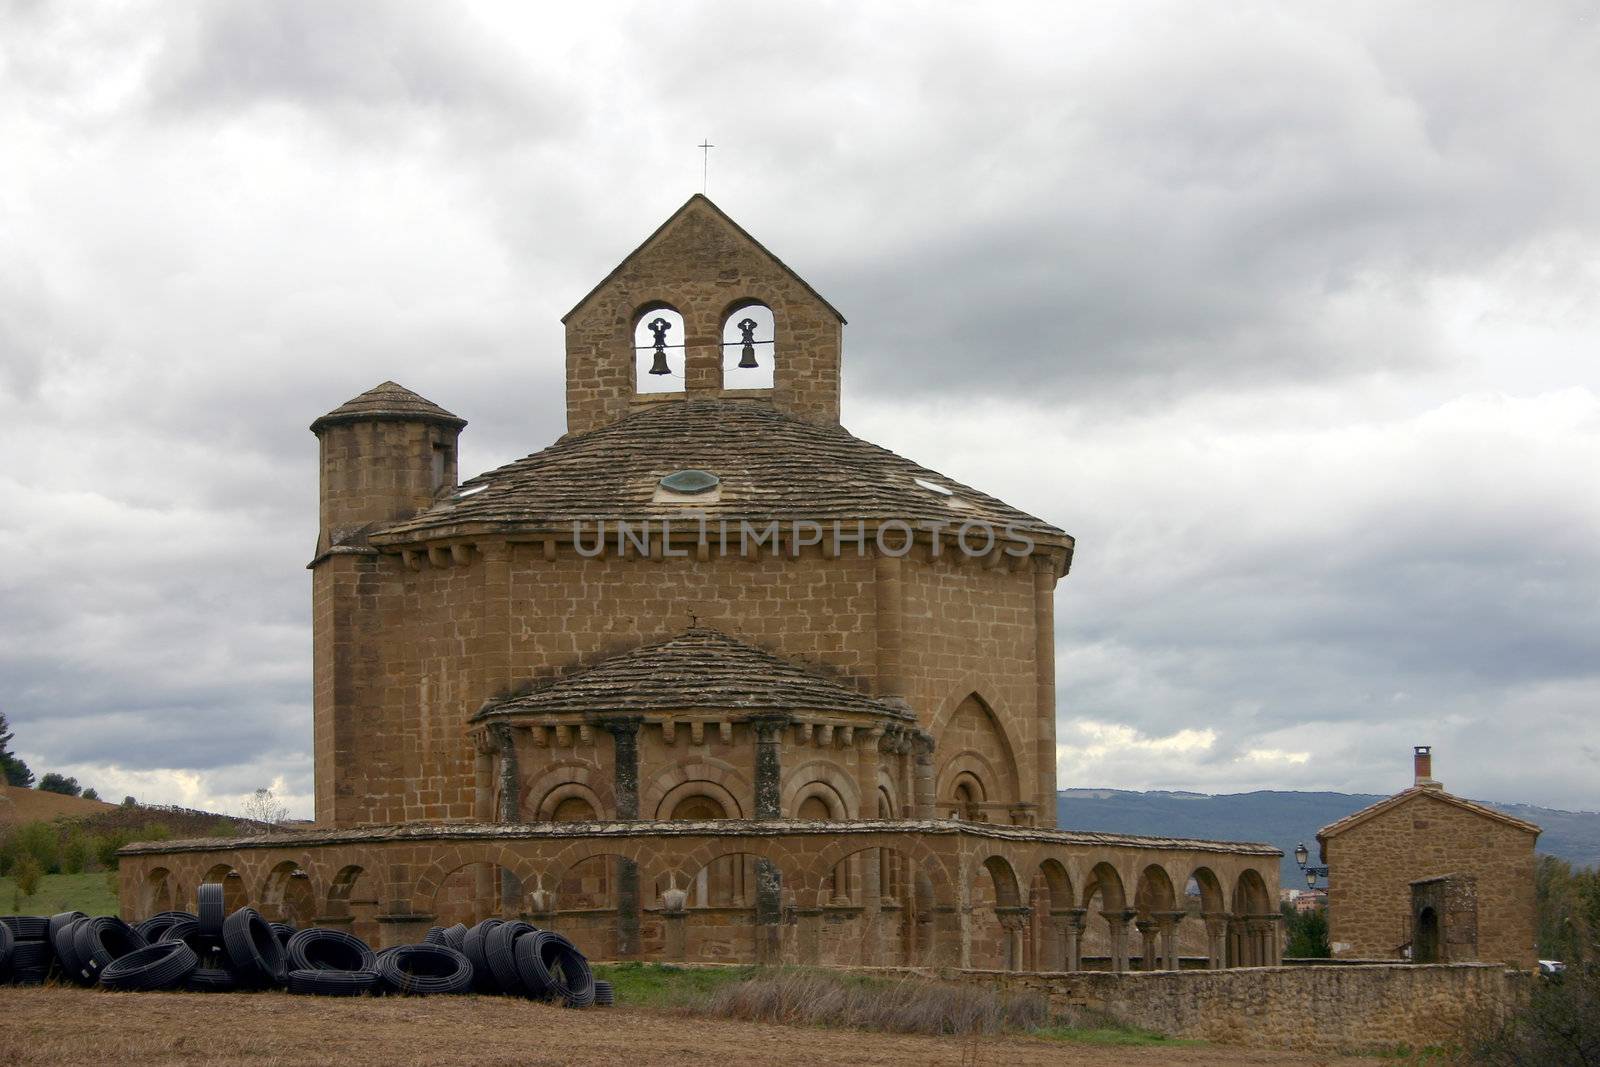 The romanic chapel of Santa Maria de Eunate, Spain built by the Templars, on the camino de Santiago